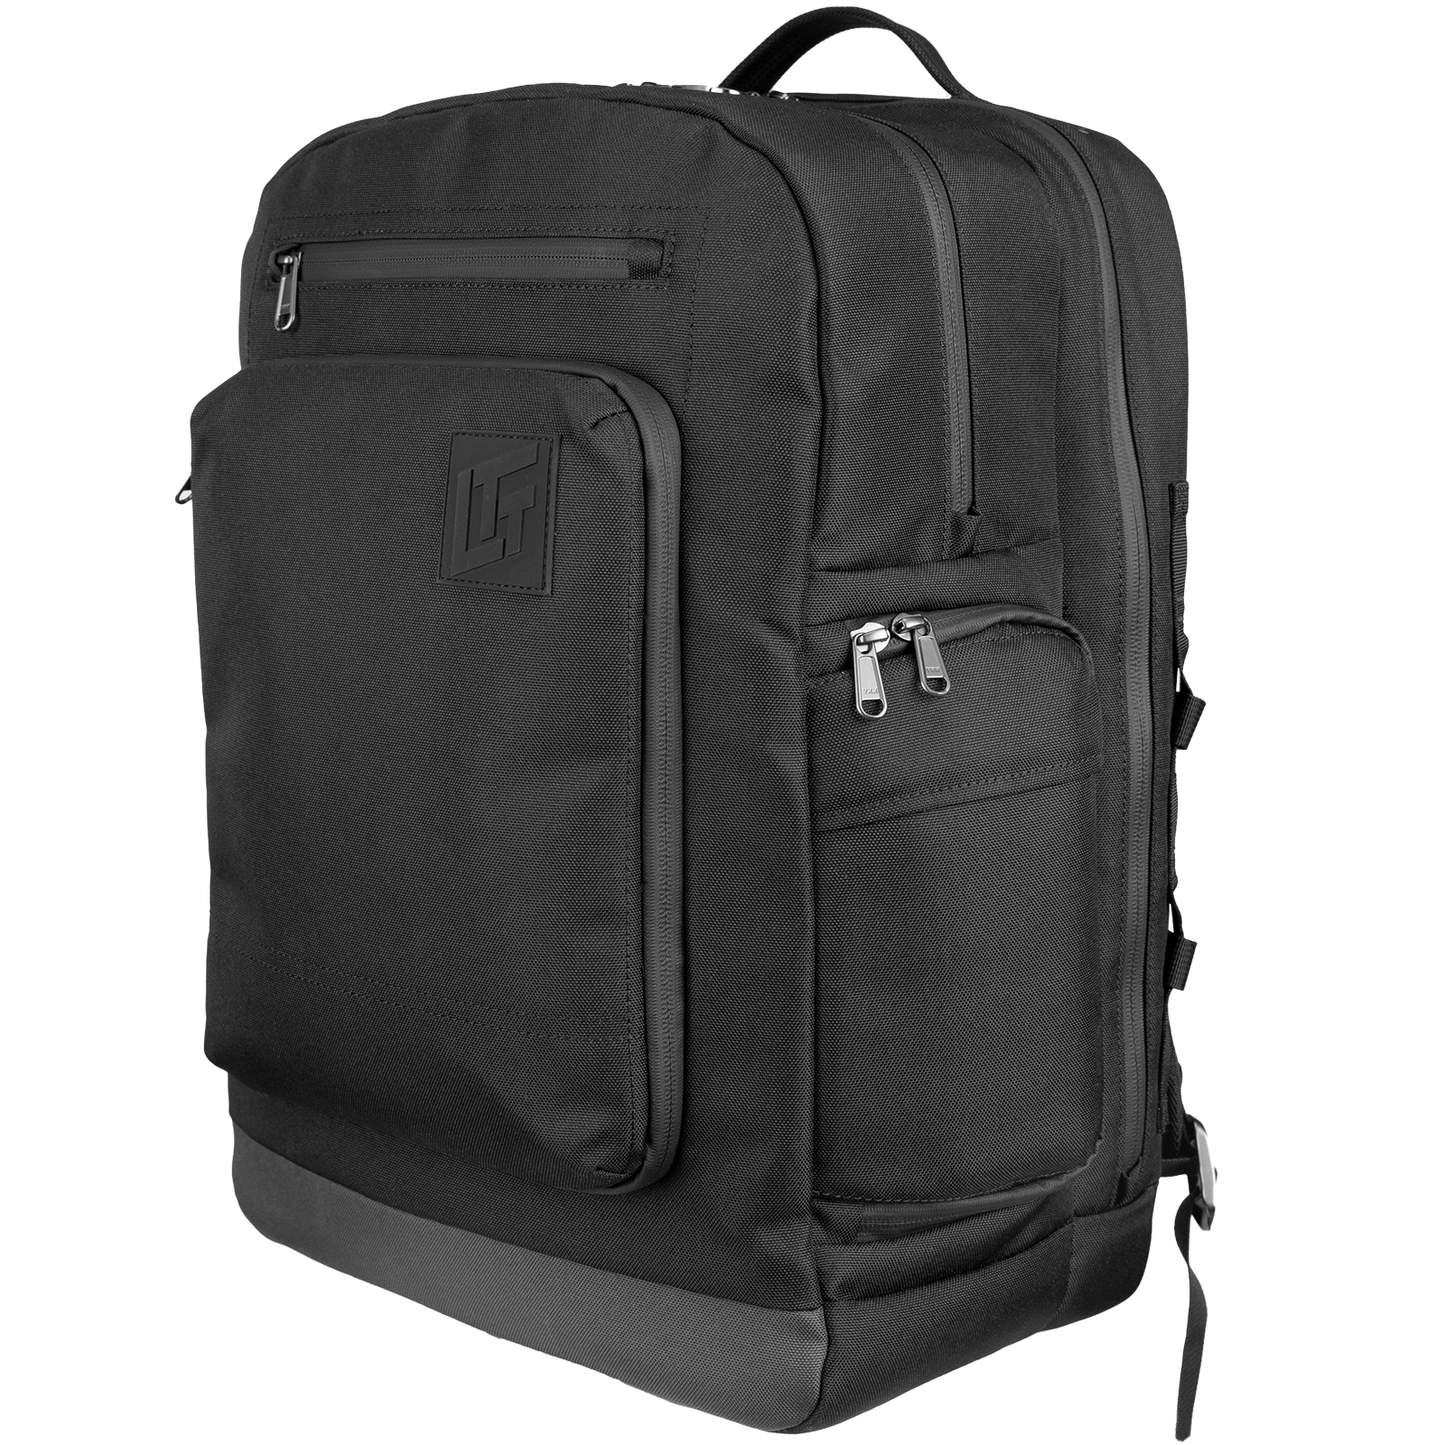 Clearance Sale BLACK Travel Backpack Rucksack Laptop School Bag